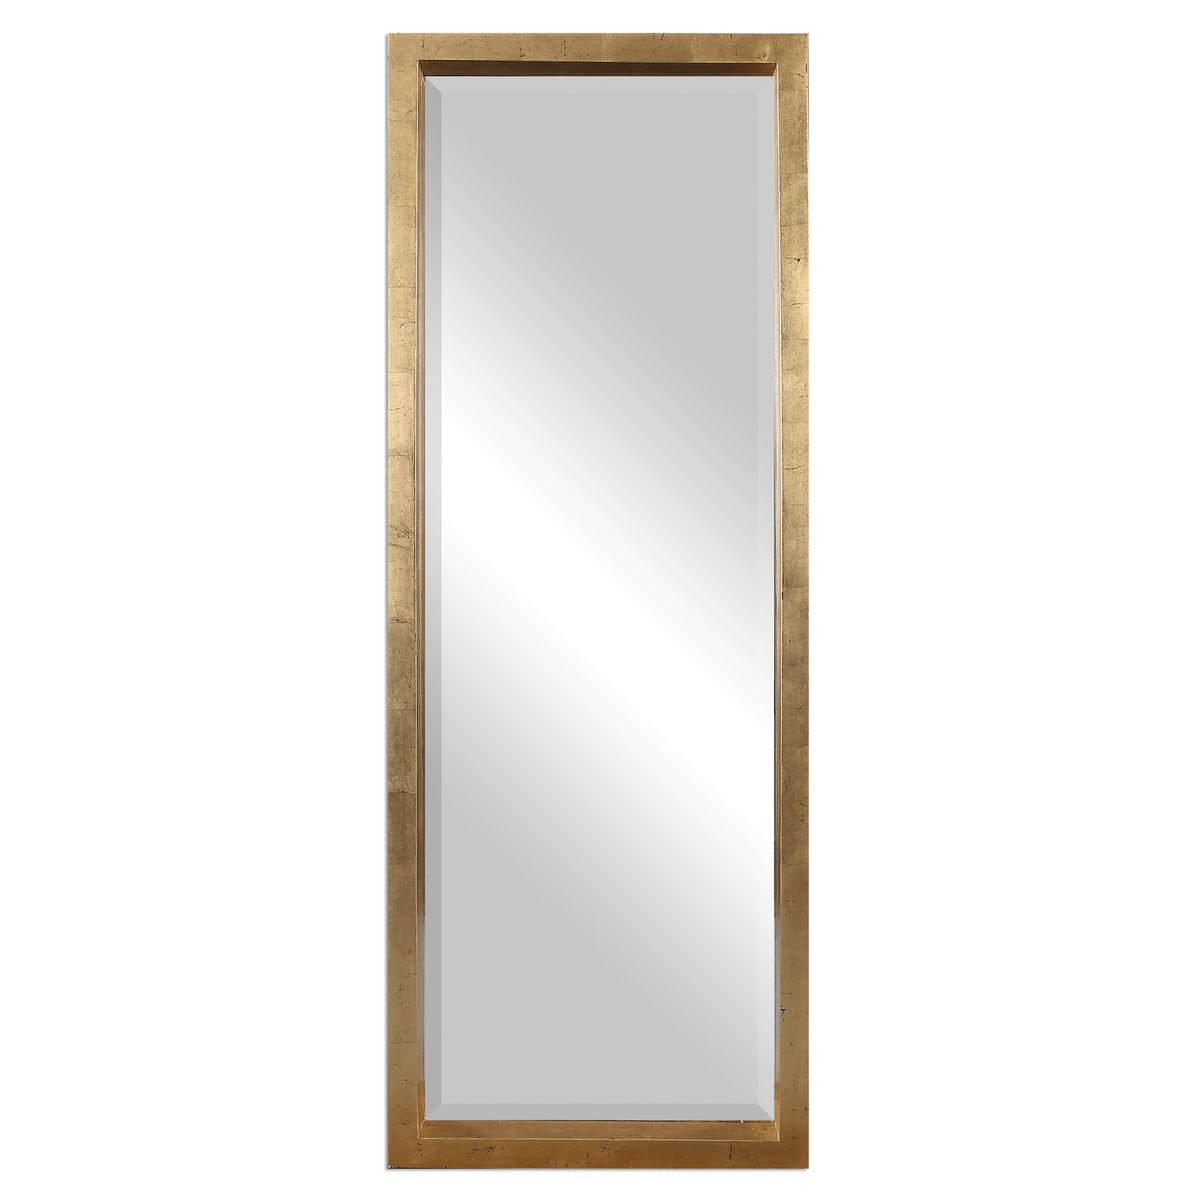 Edmonton Gold Leaner Mirror